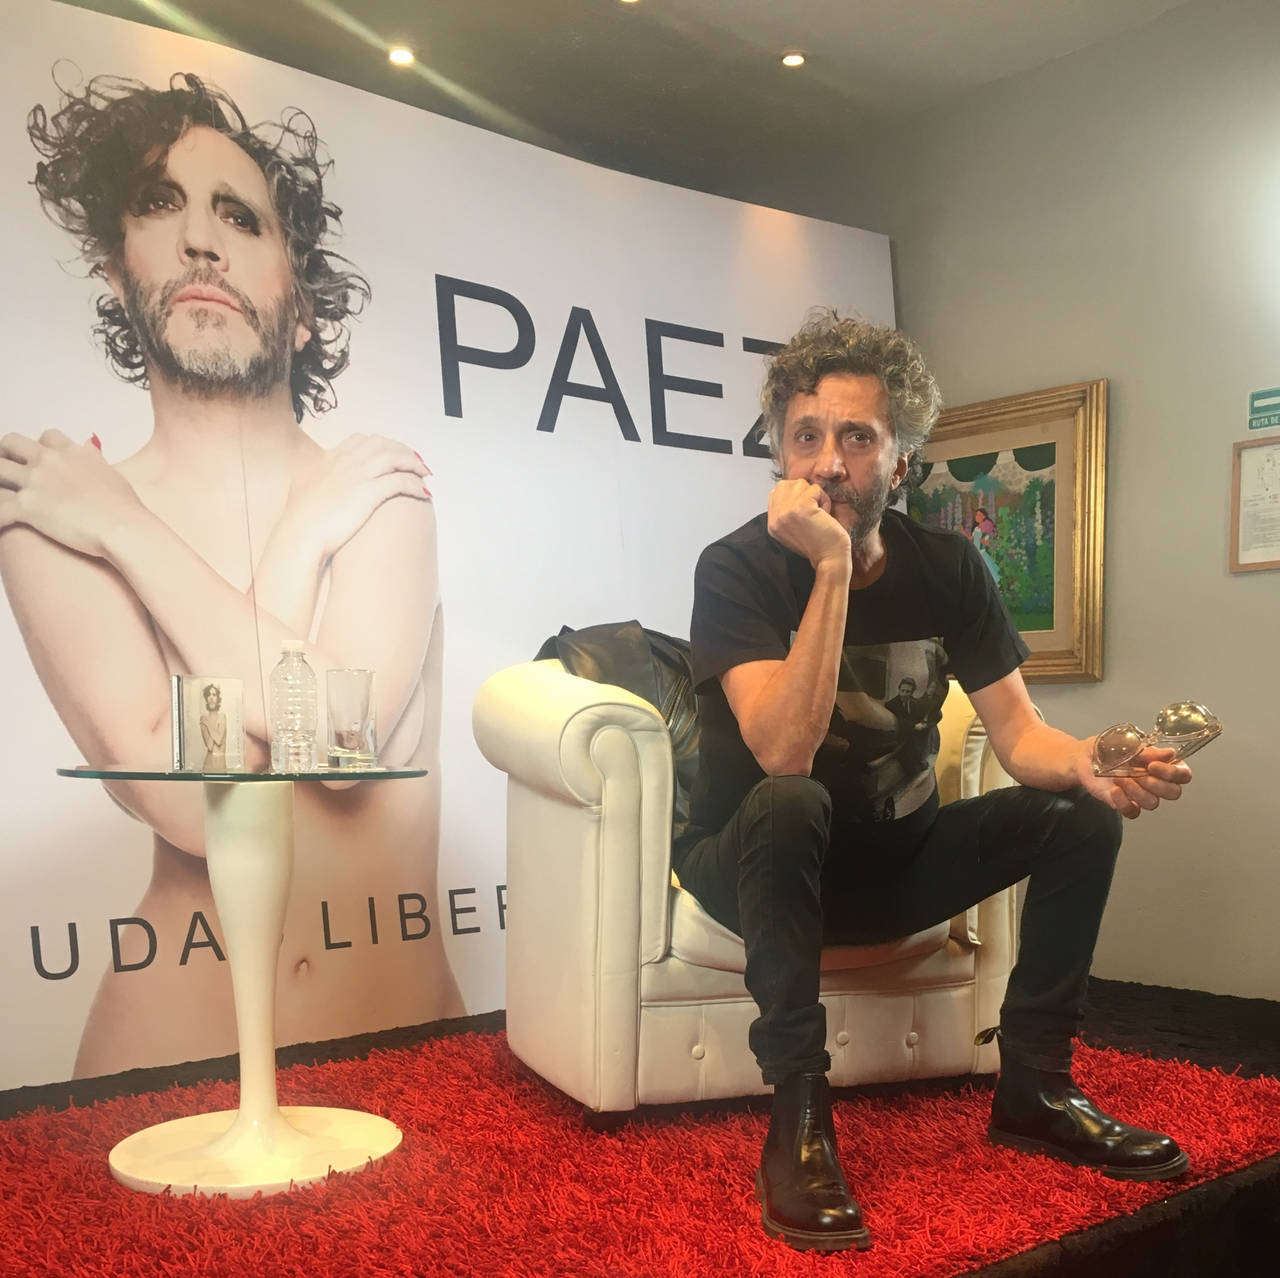 De gira. El cantante Fito Páez realizará un tour por varias ciudades de Latinoamérica. (NOTIMEX)